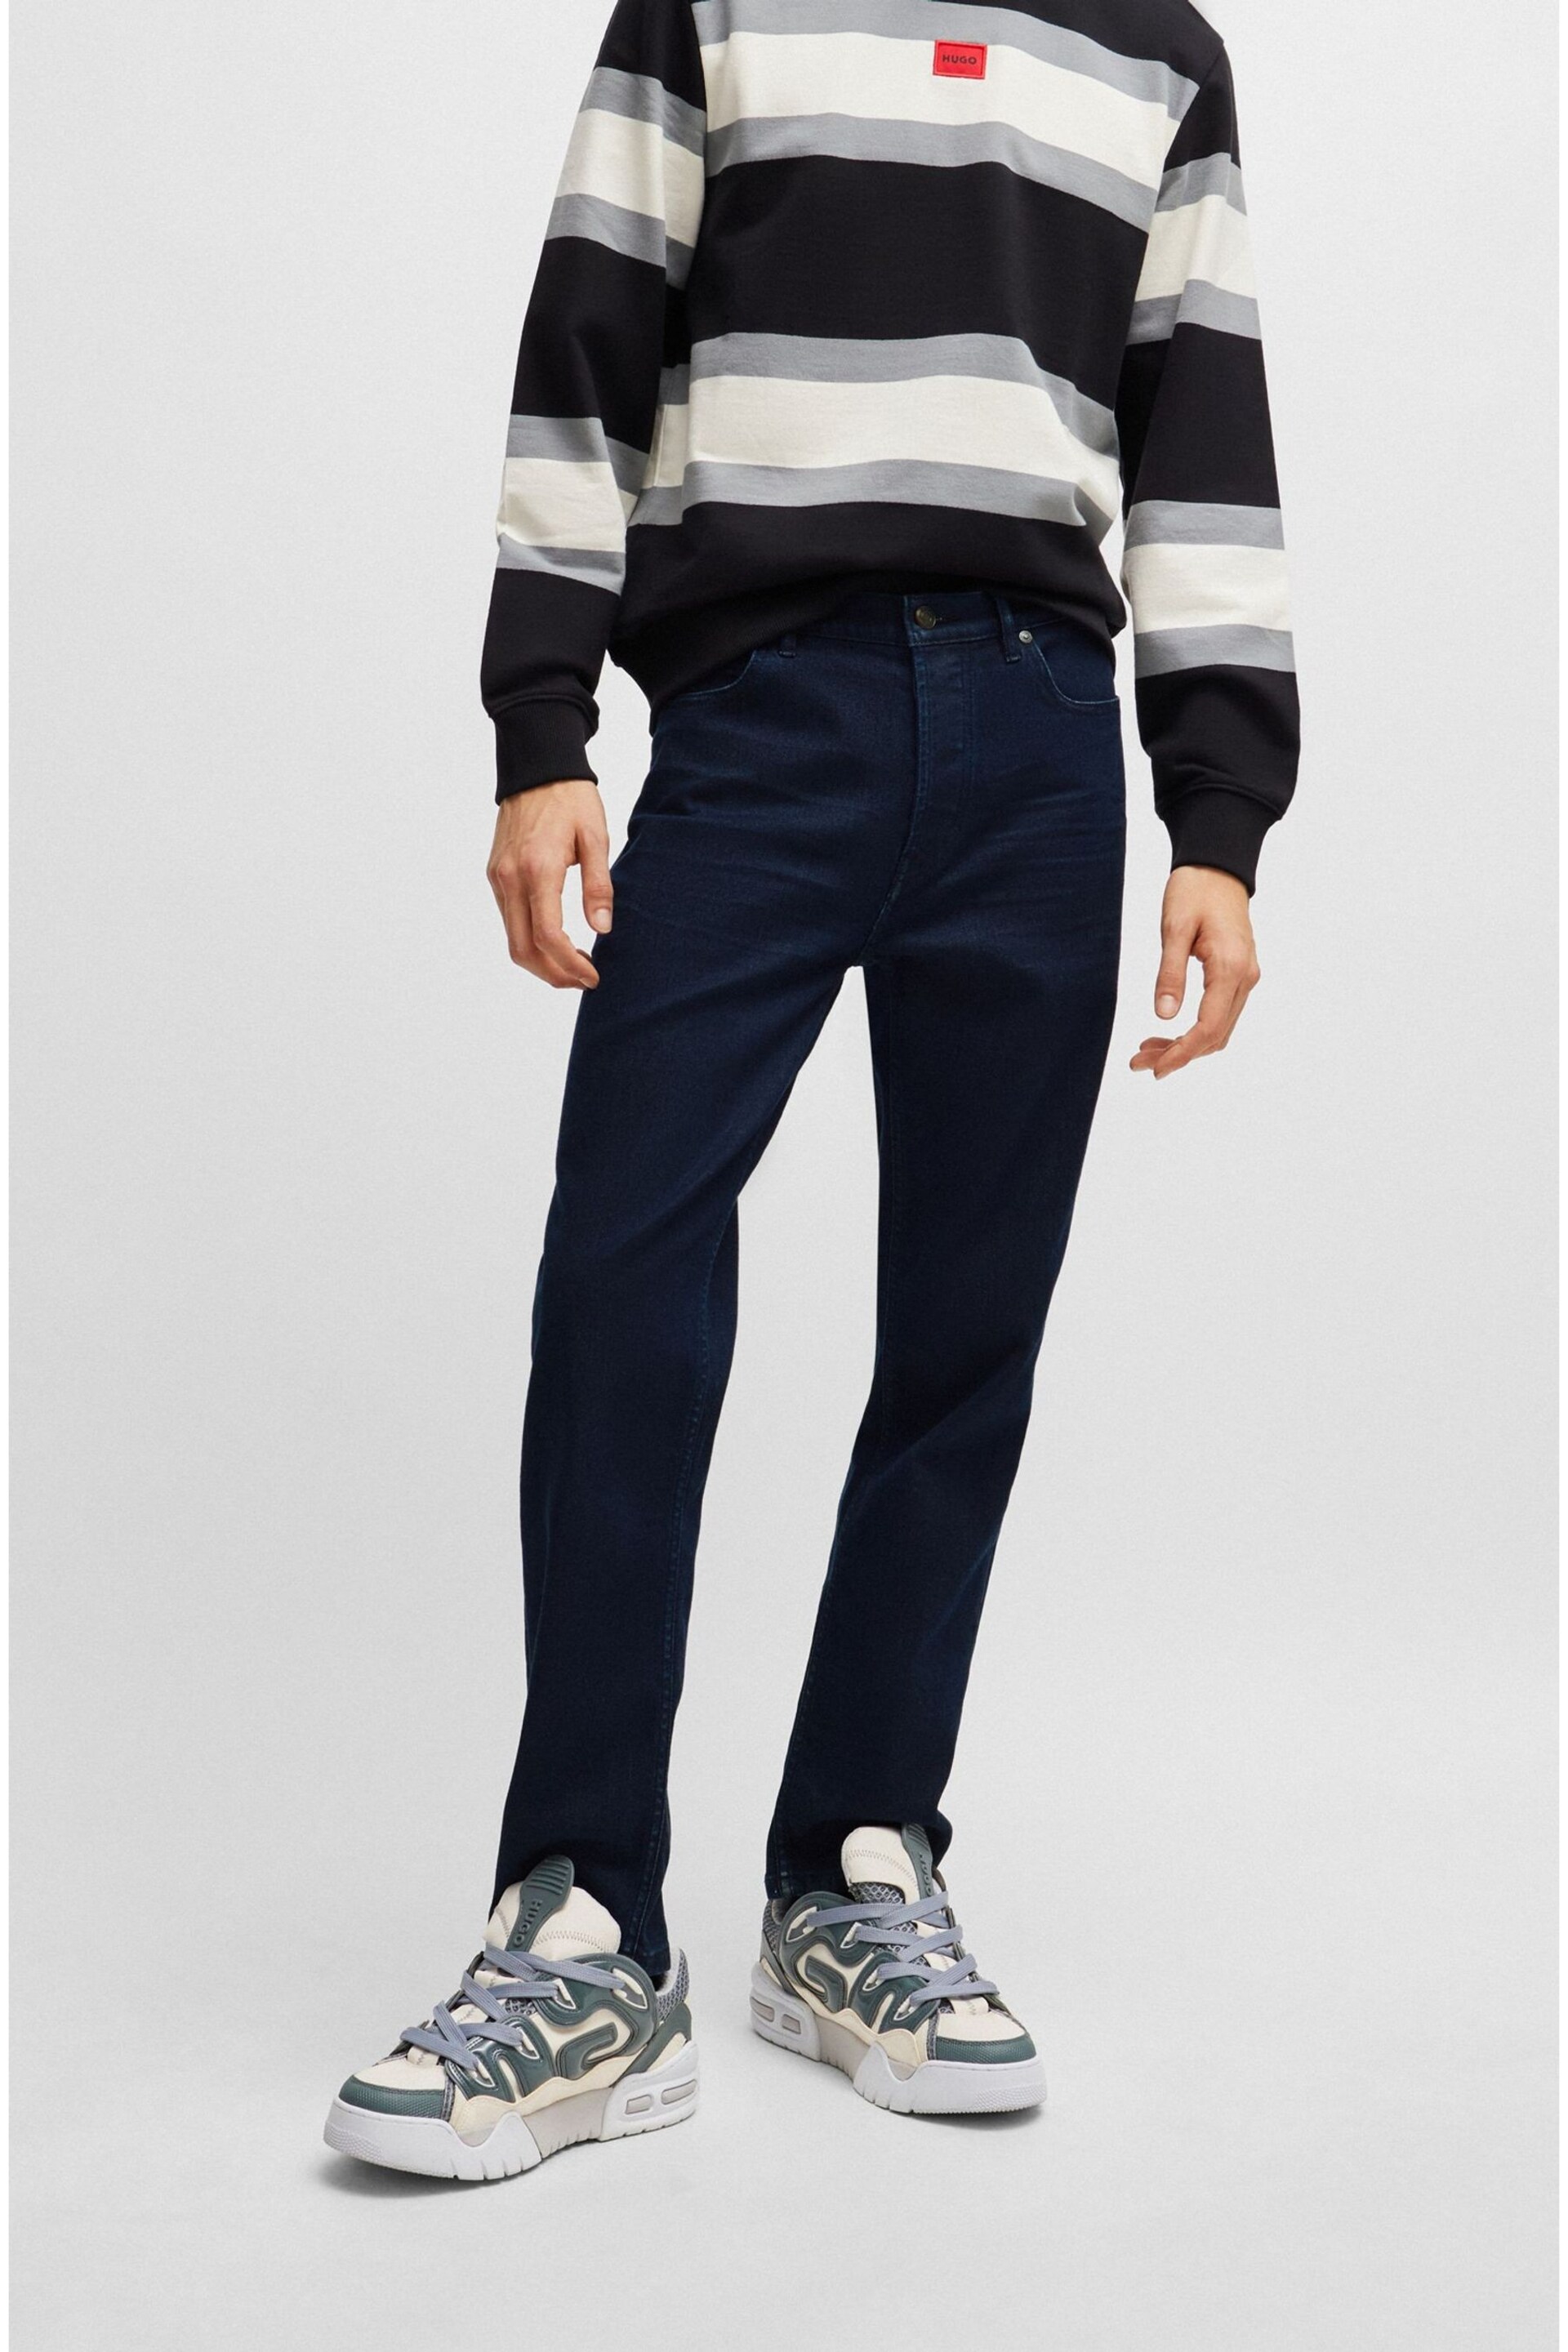 HUGO Tapered-Fit Jeans in Dark-Blue Comfort-Stretch Denim - Image 1 of 5